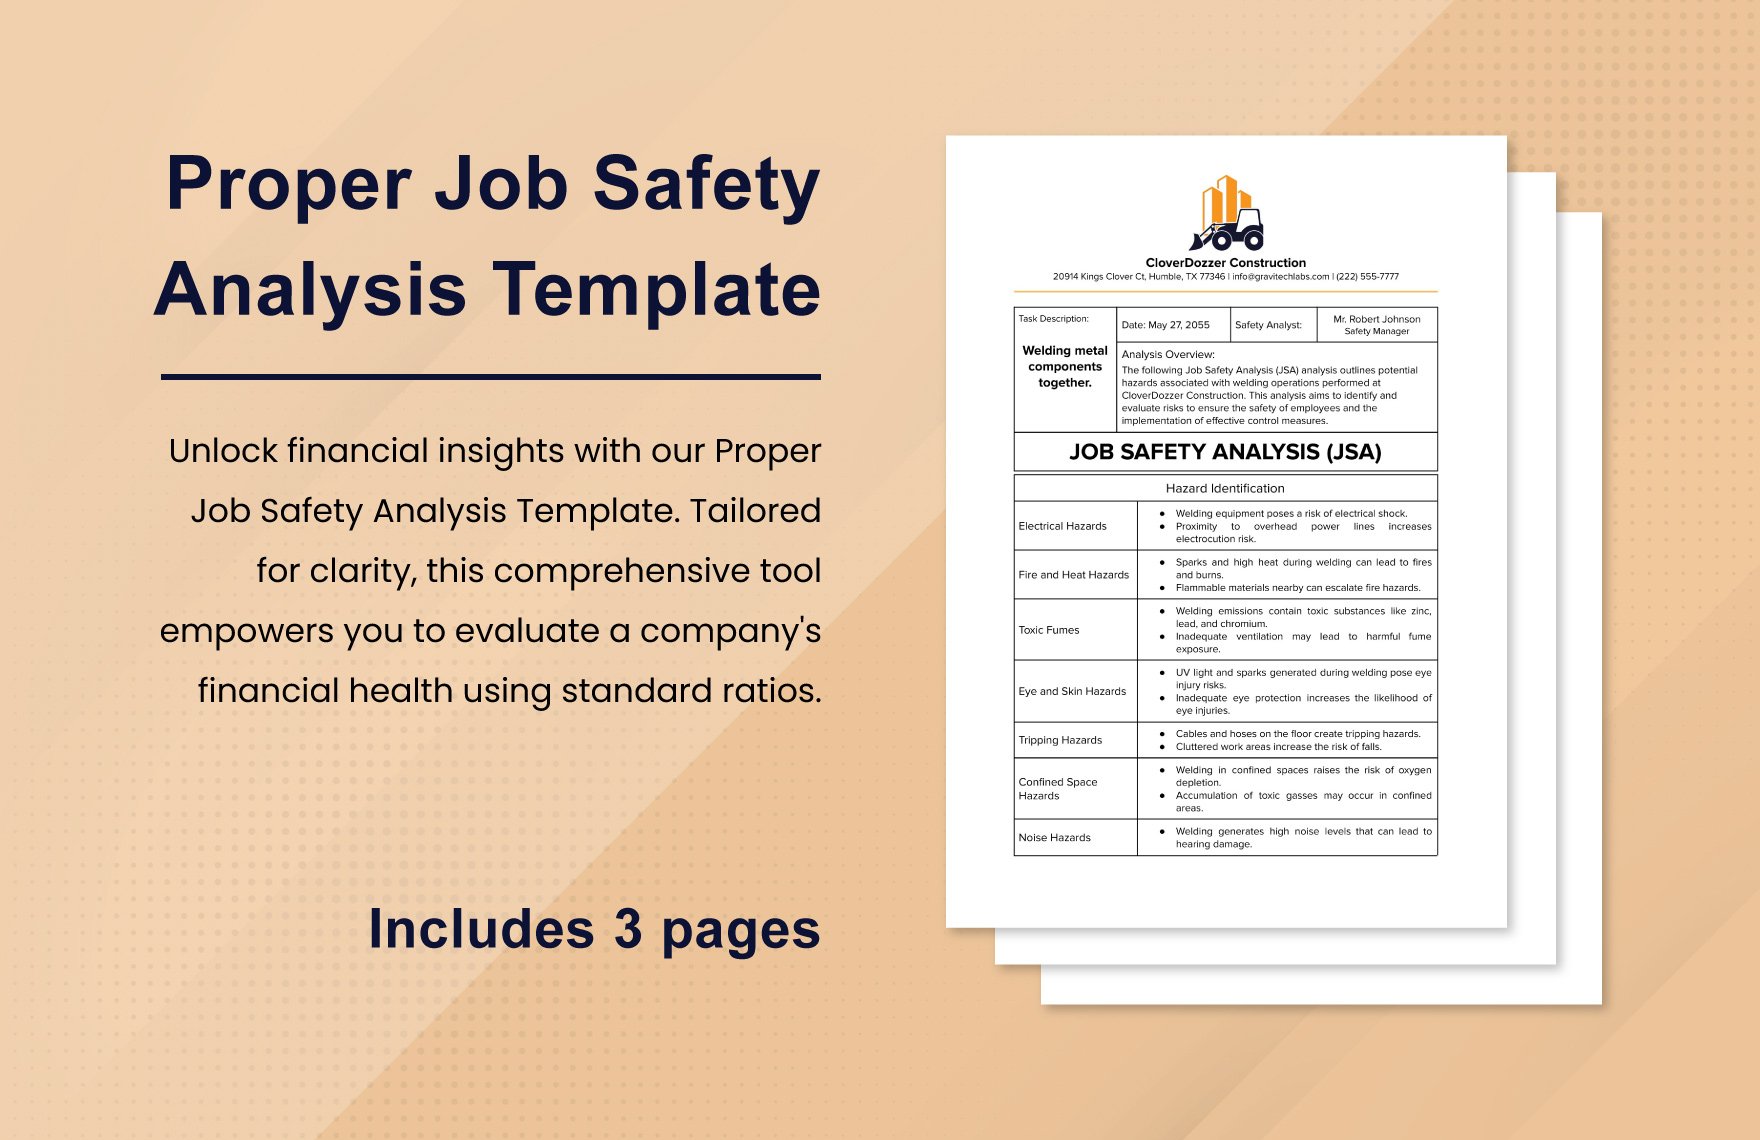 Proper Job Safety Analysis Template